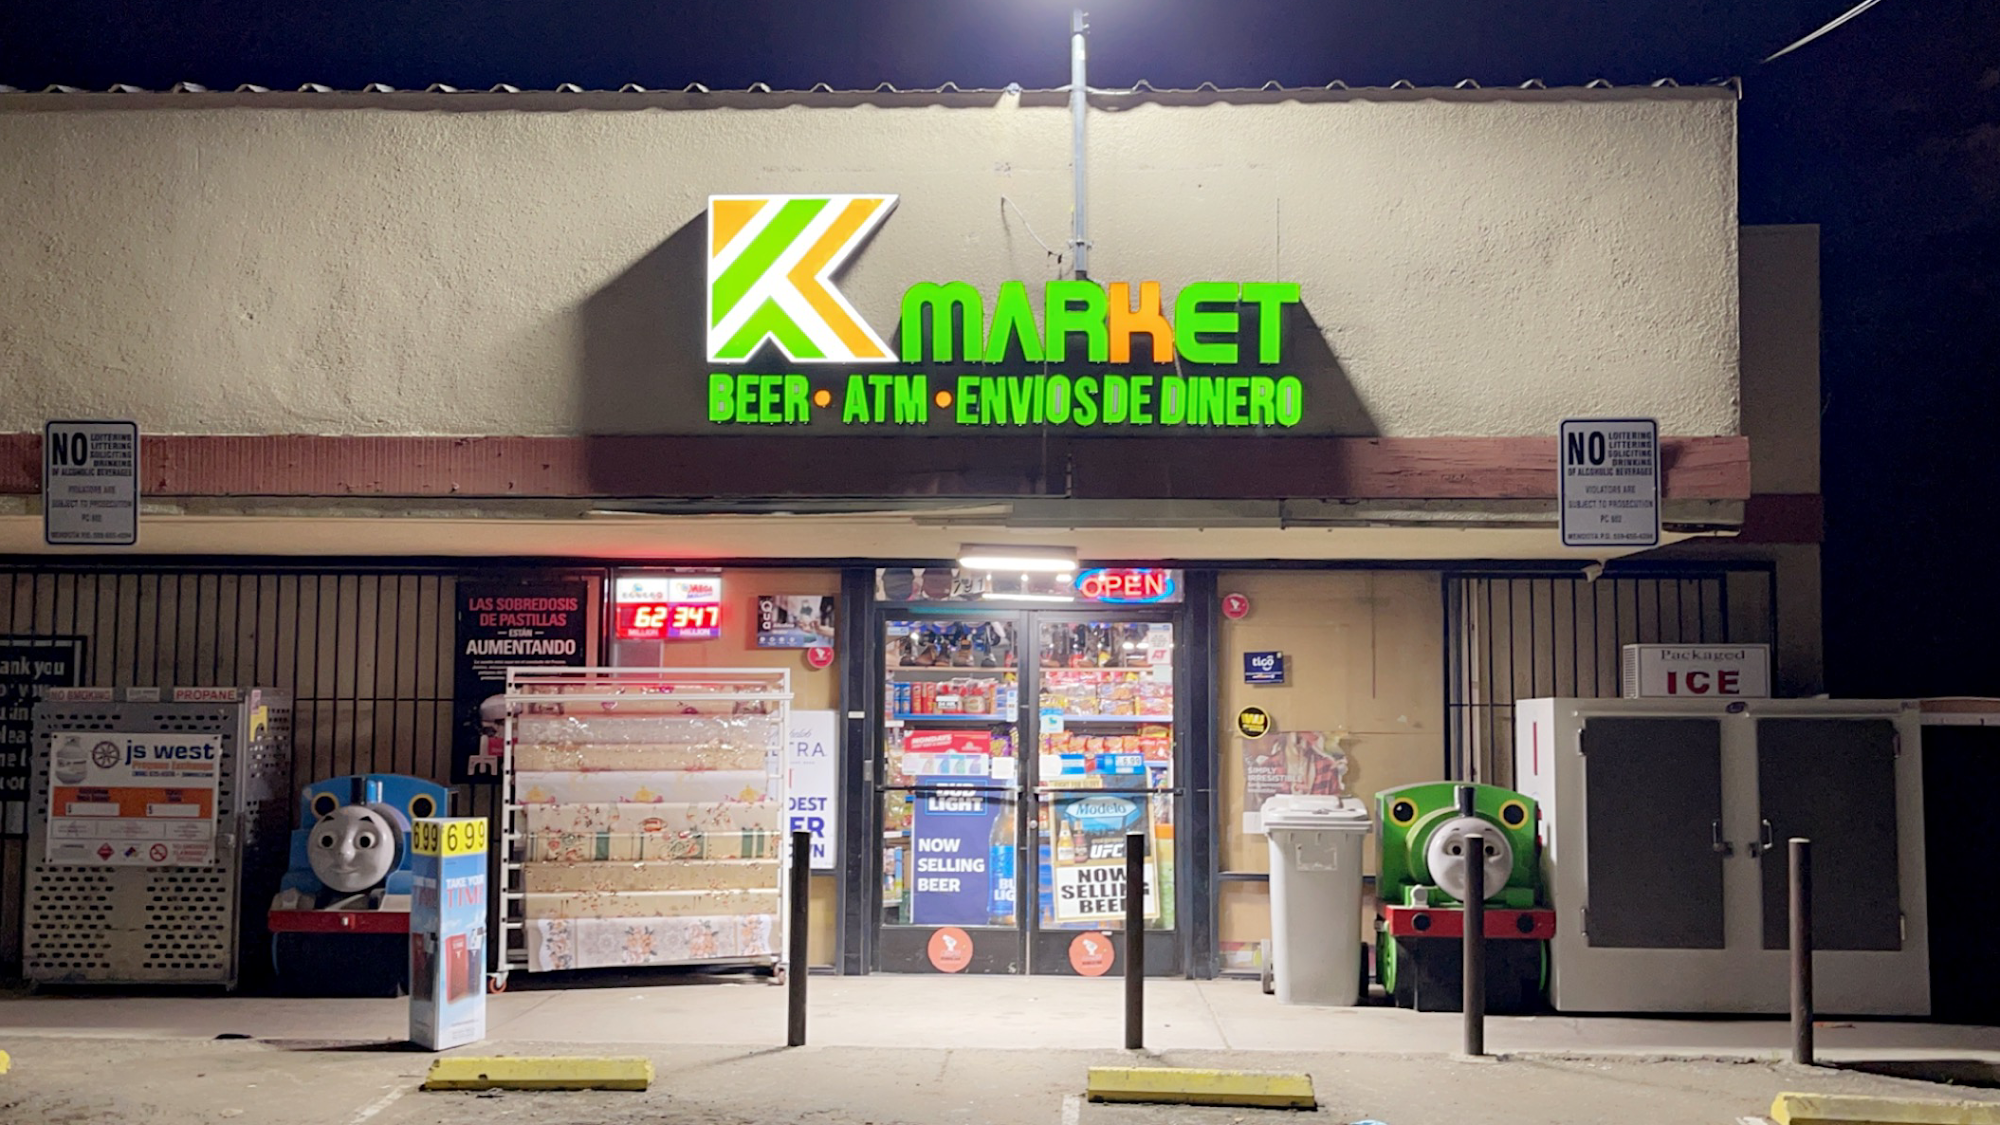 K Market